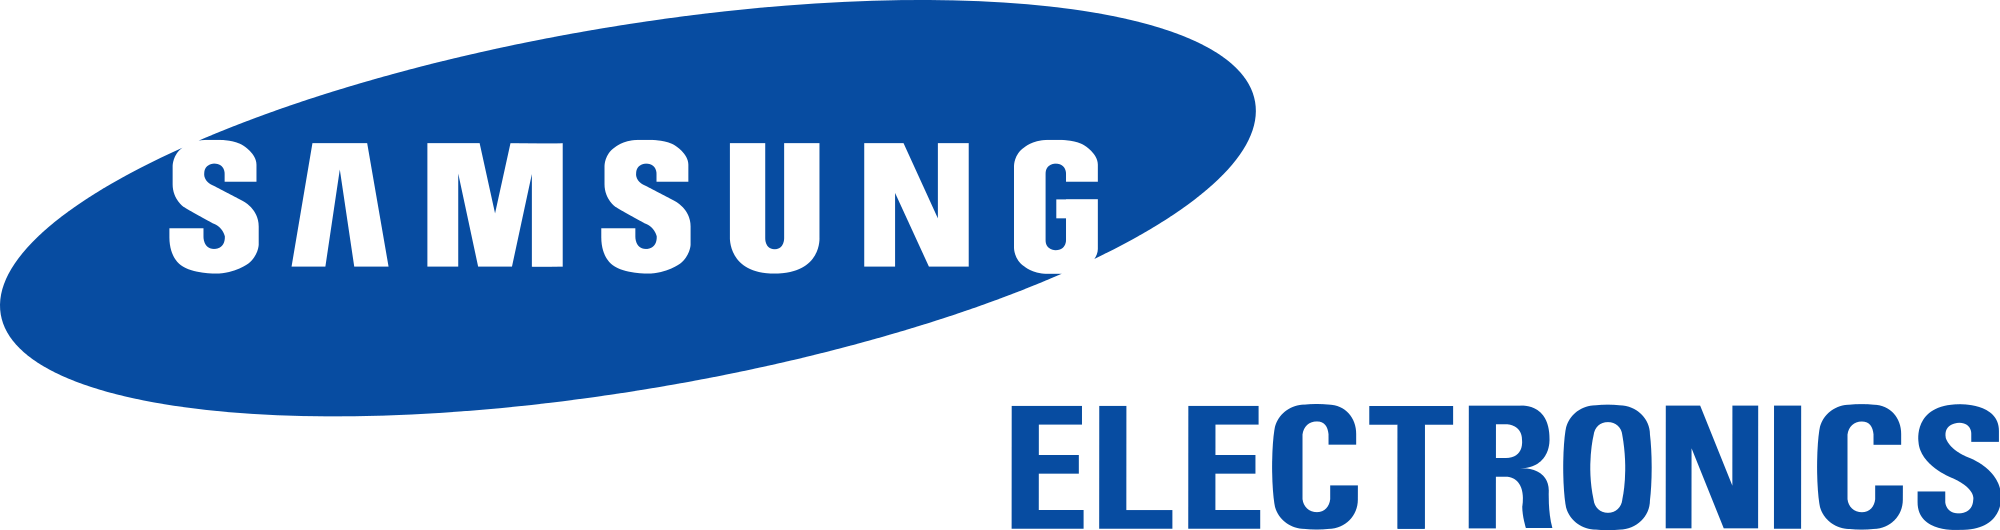 Samsung Electronics Logo - File:Samsung Electronics logo (english).svg - Wikimedia Commons